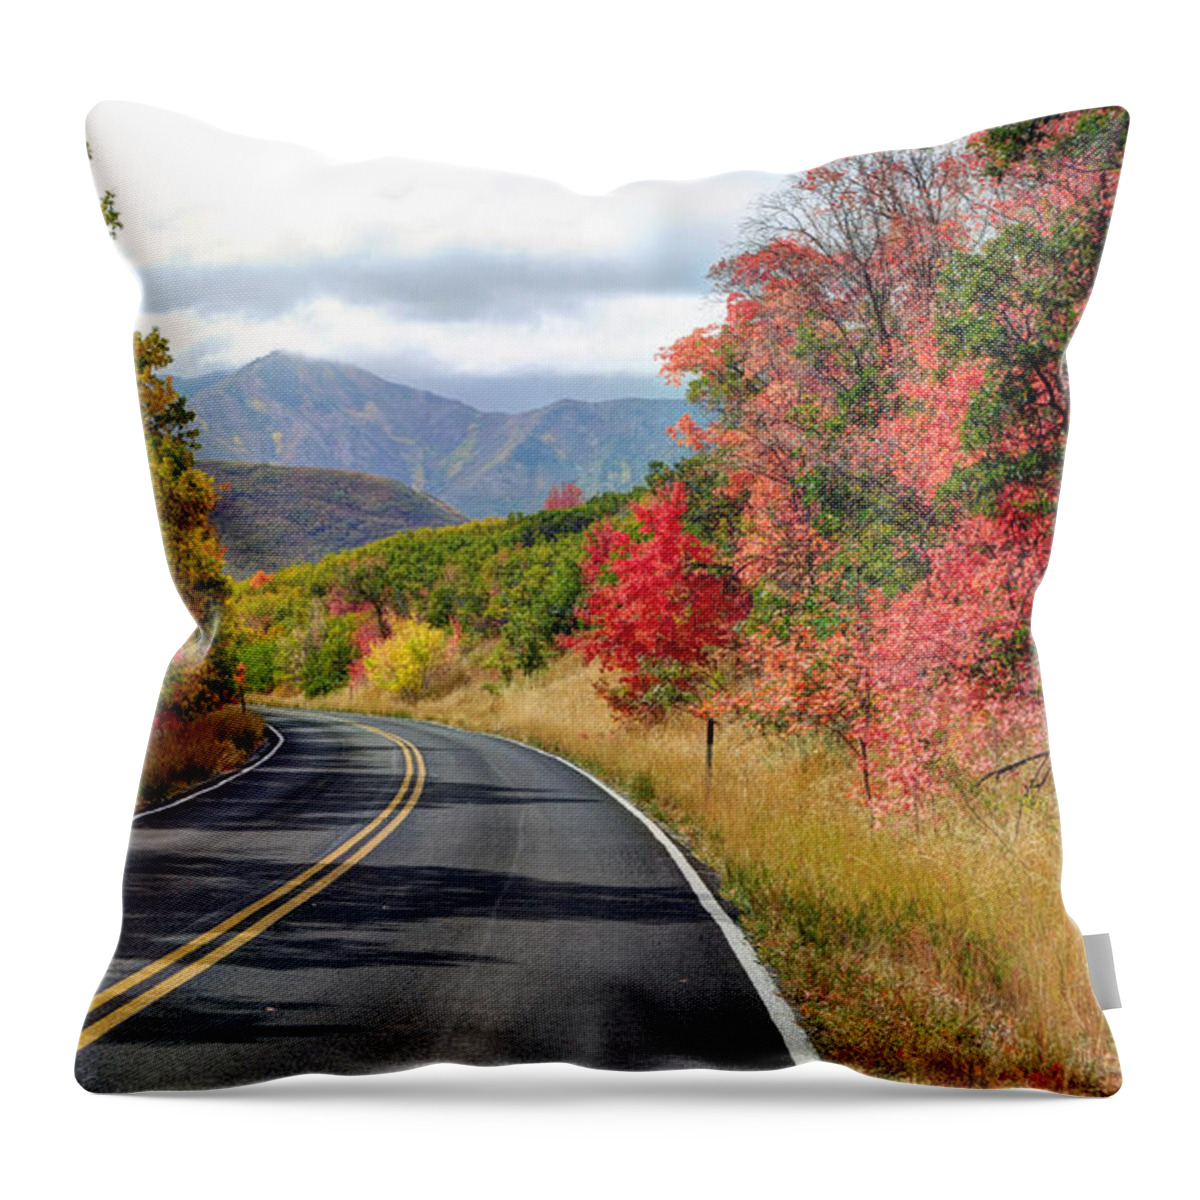 Utah Throw Pillow featuring the photograph Autumn Drive through East Canyon - Utah #5 by Gary Whitton